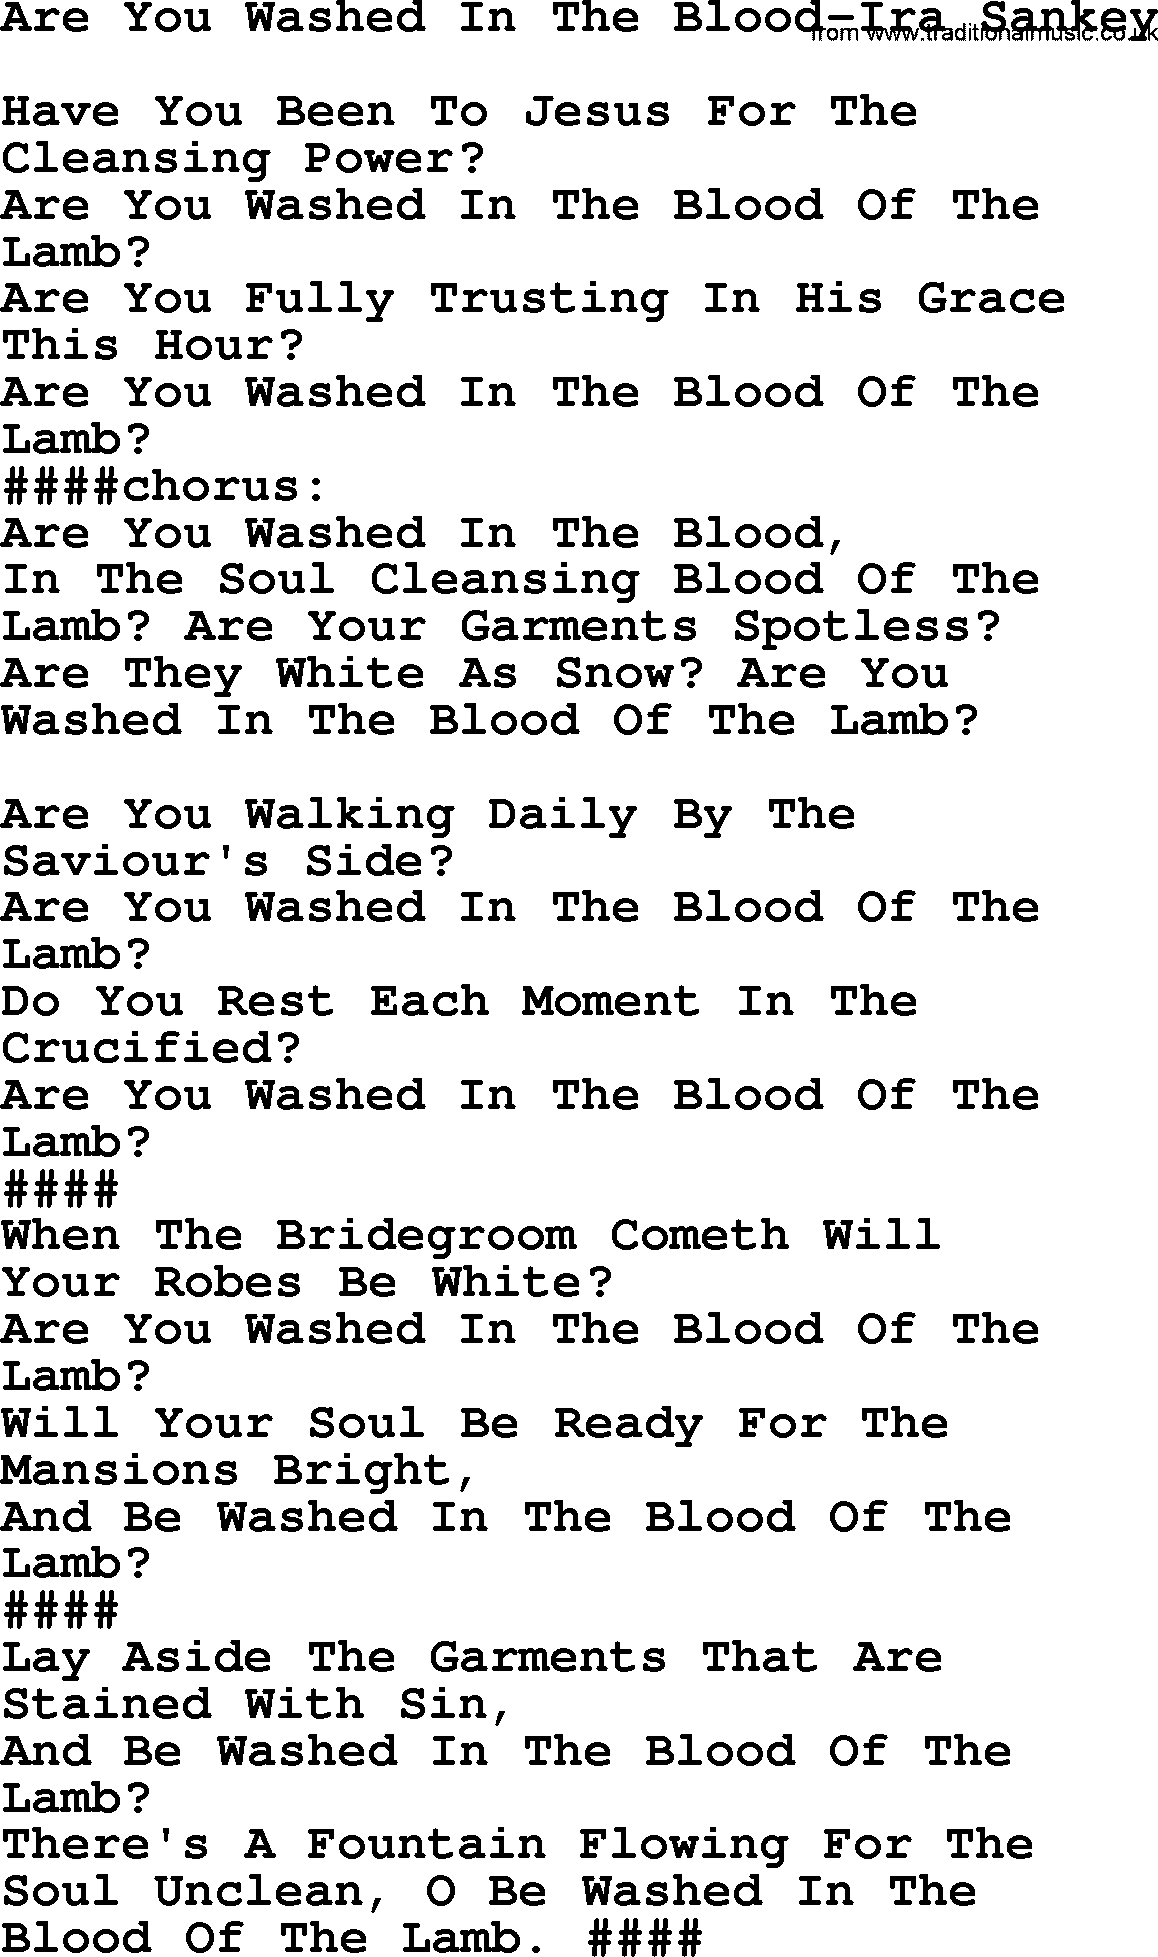 Ira Sankey hymn: Are You Washed In The Blood-Ira Sankey, lyrics